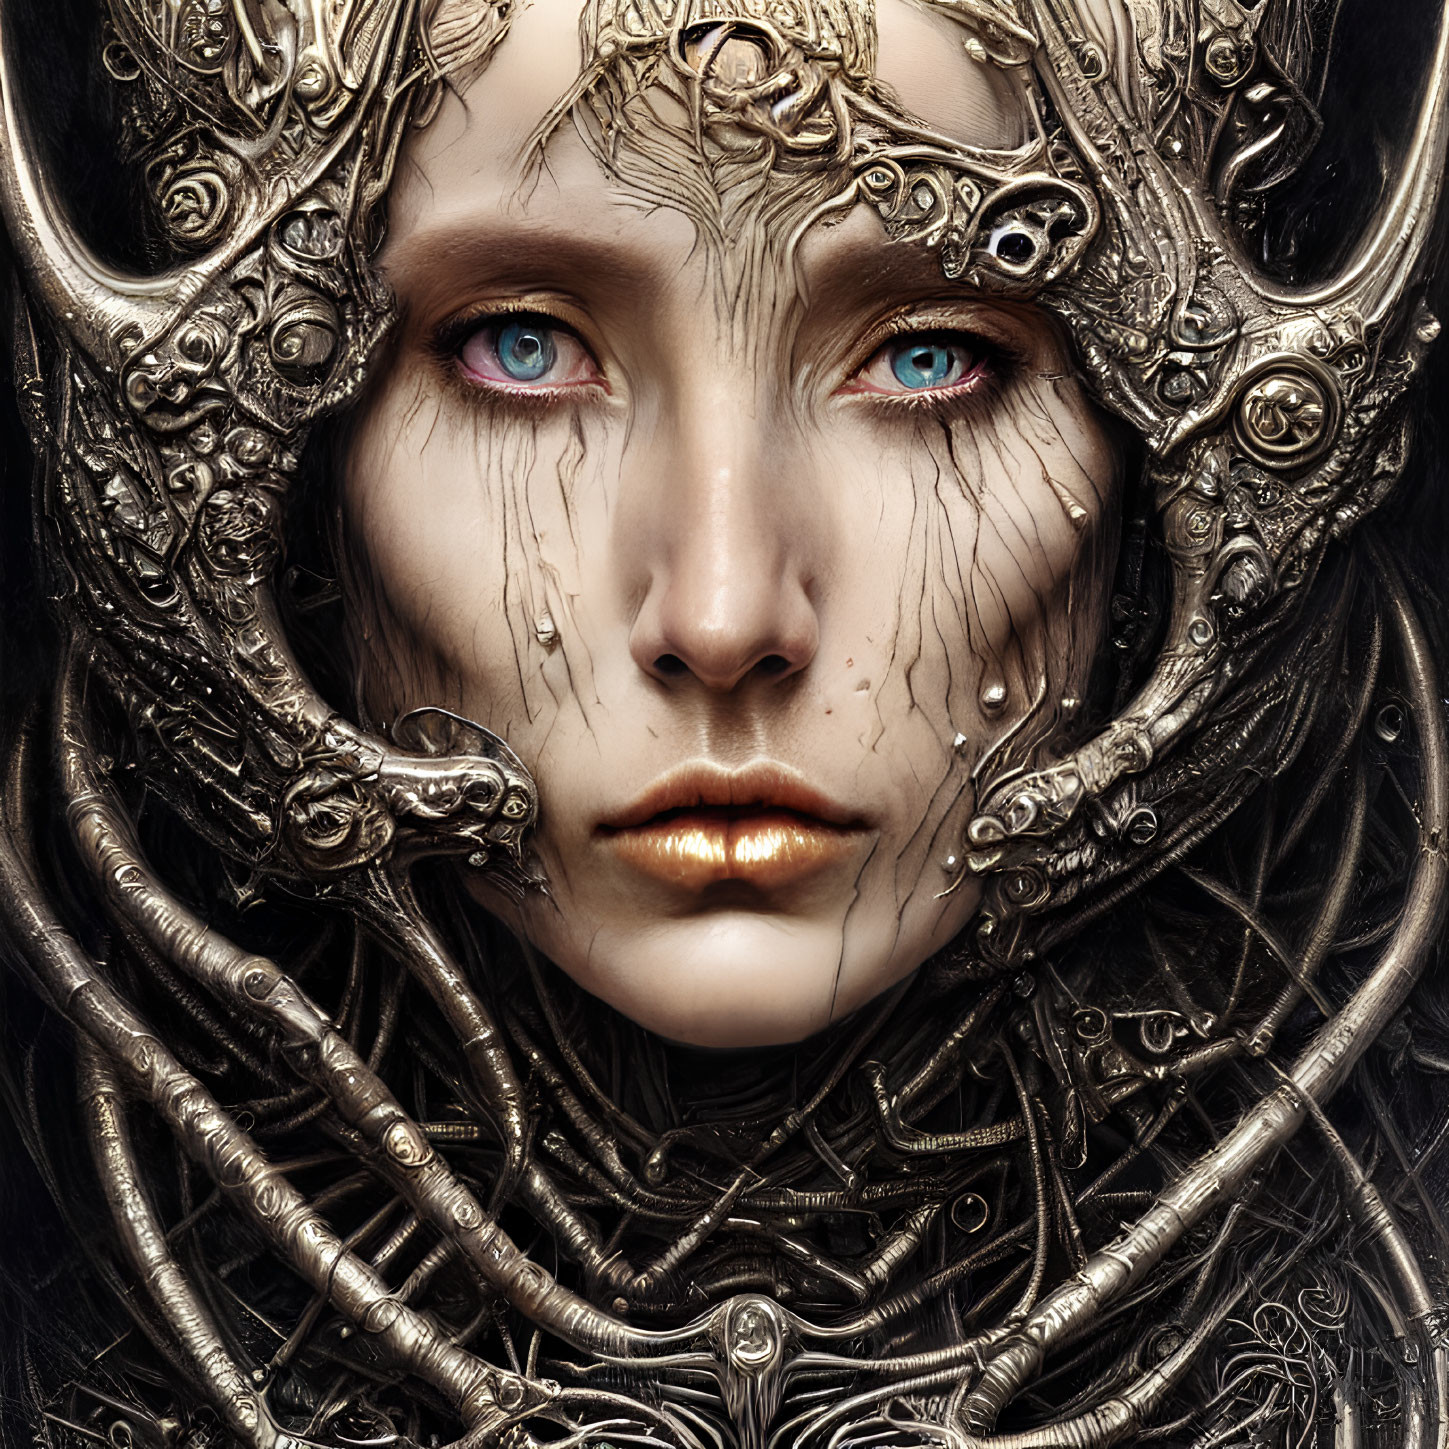 Fantasy portrait featuring metallic headpiece, blue eyes, and tear streaks